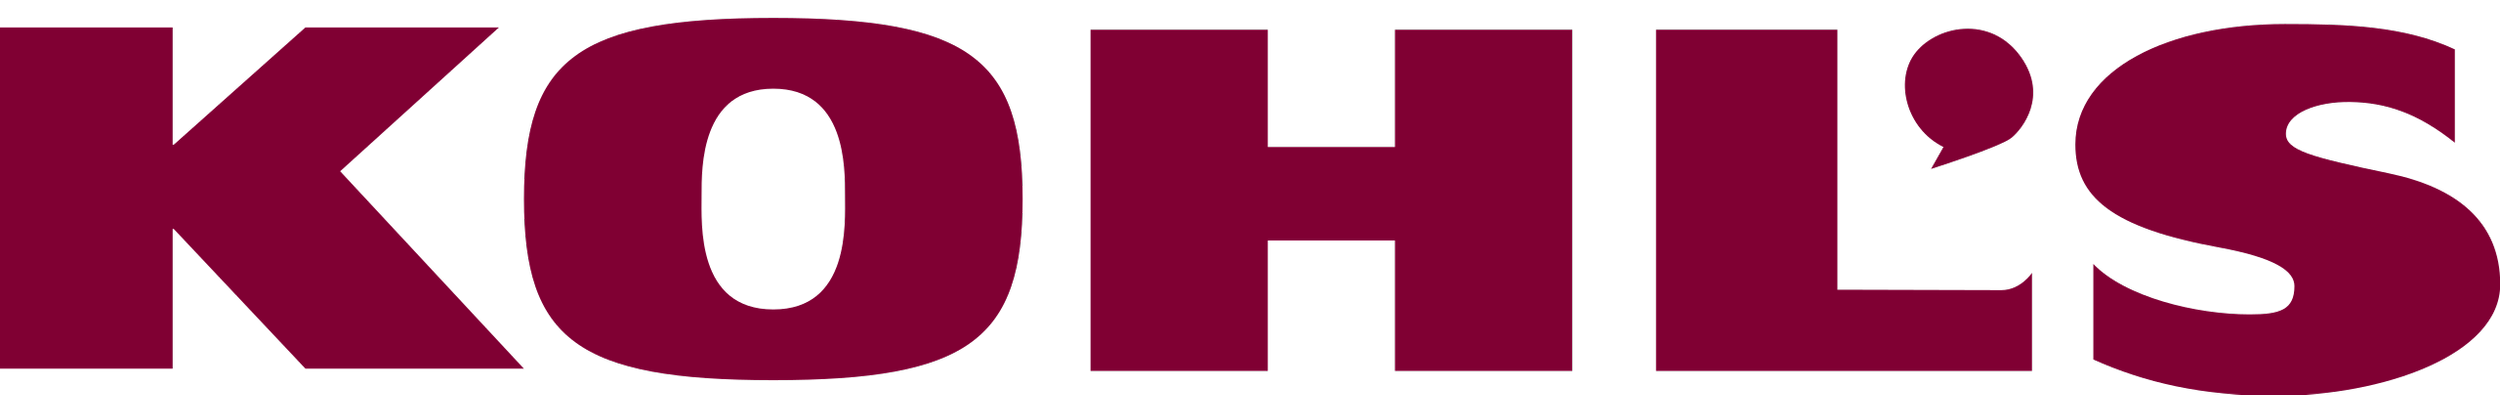 Kohl's_logo.svg.png